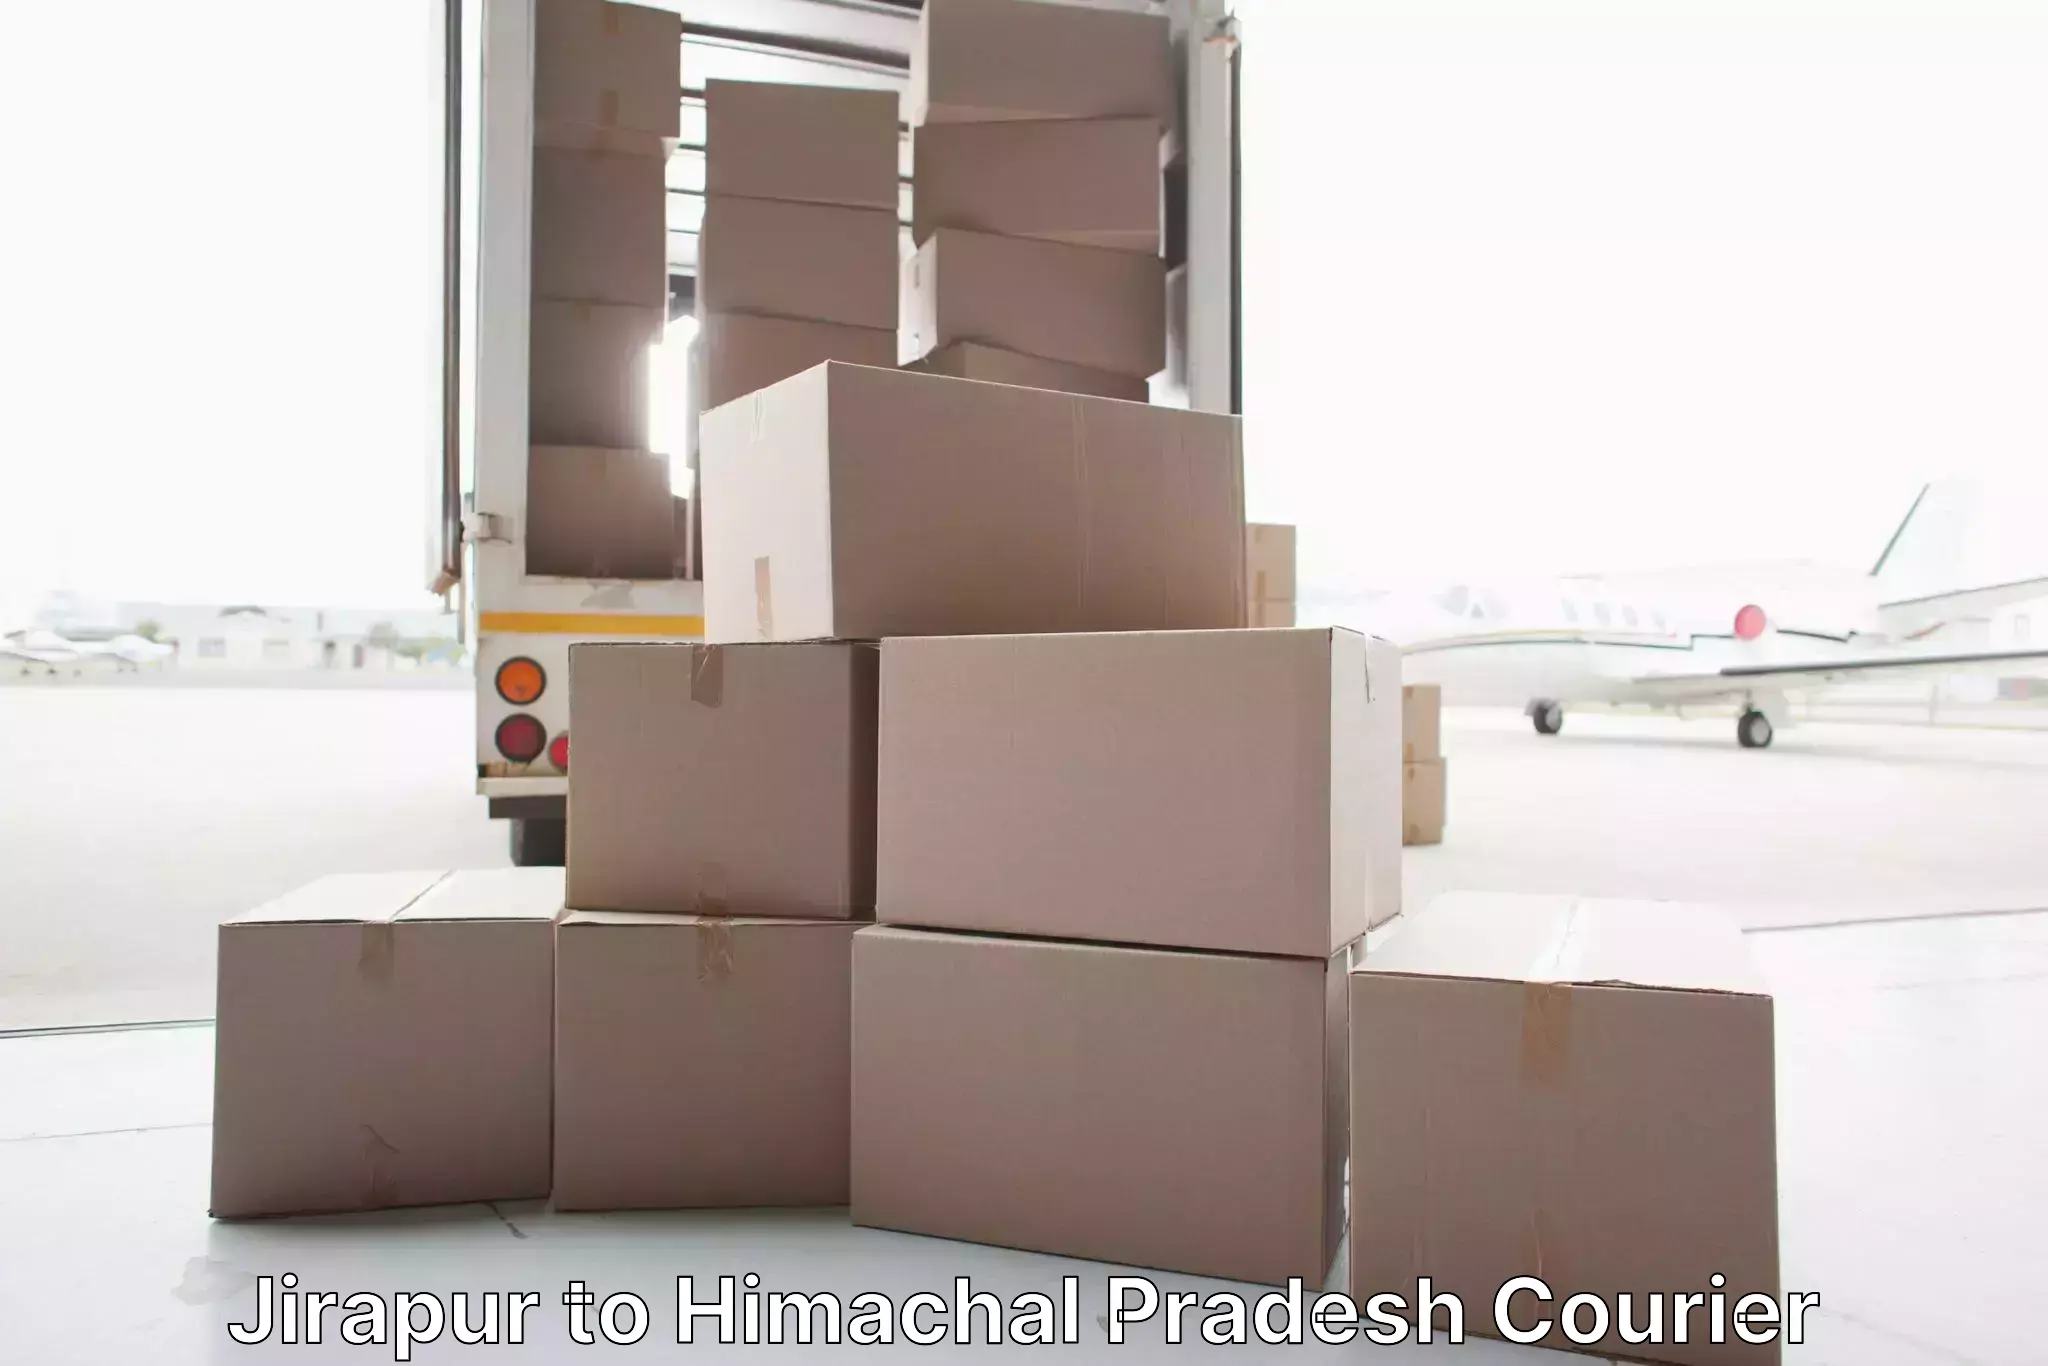 Furniture delivery service Jirapur to Una Himachal Pradesh